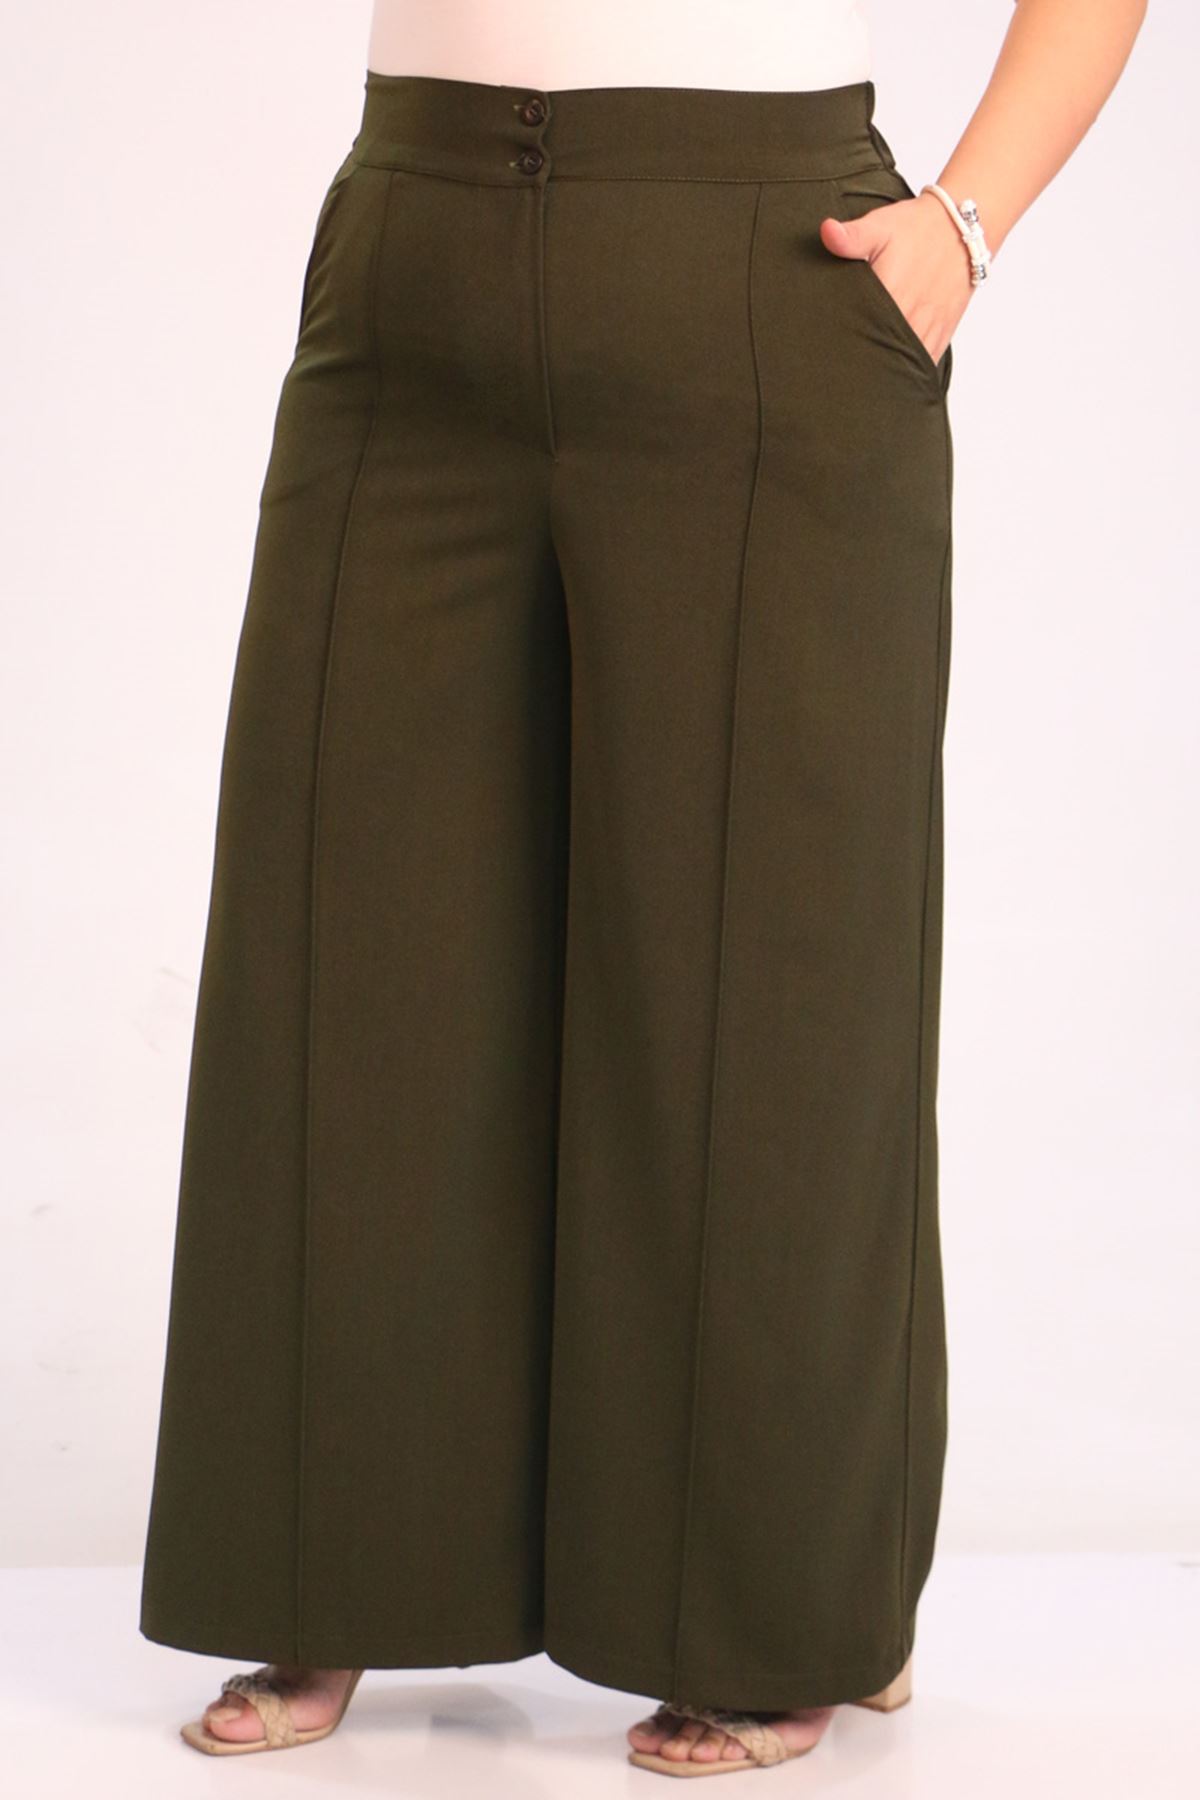 39037 Plus Size Aspen Elastic Waist Trousers - Khaki